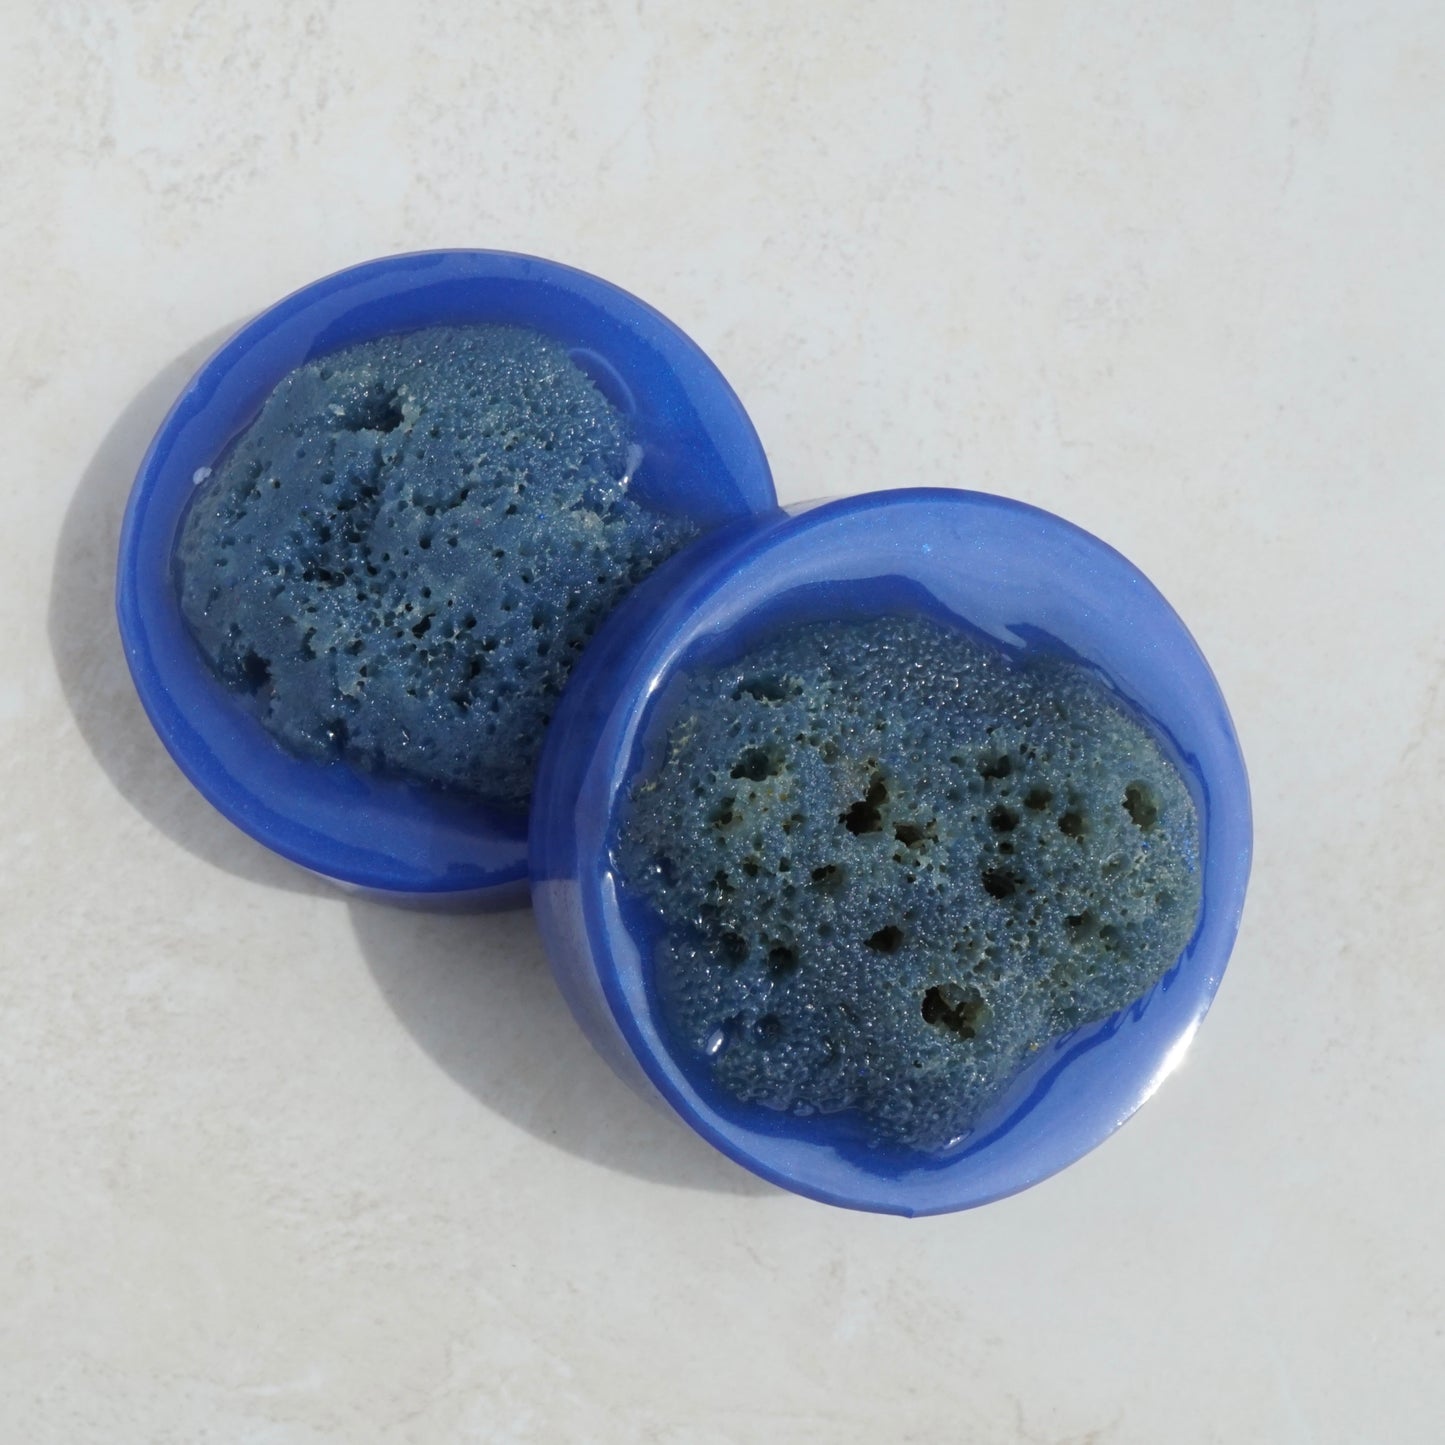 Lakeshore Sponge Soap - Silk Sea Sponge in Glycerin Soap